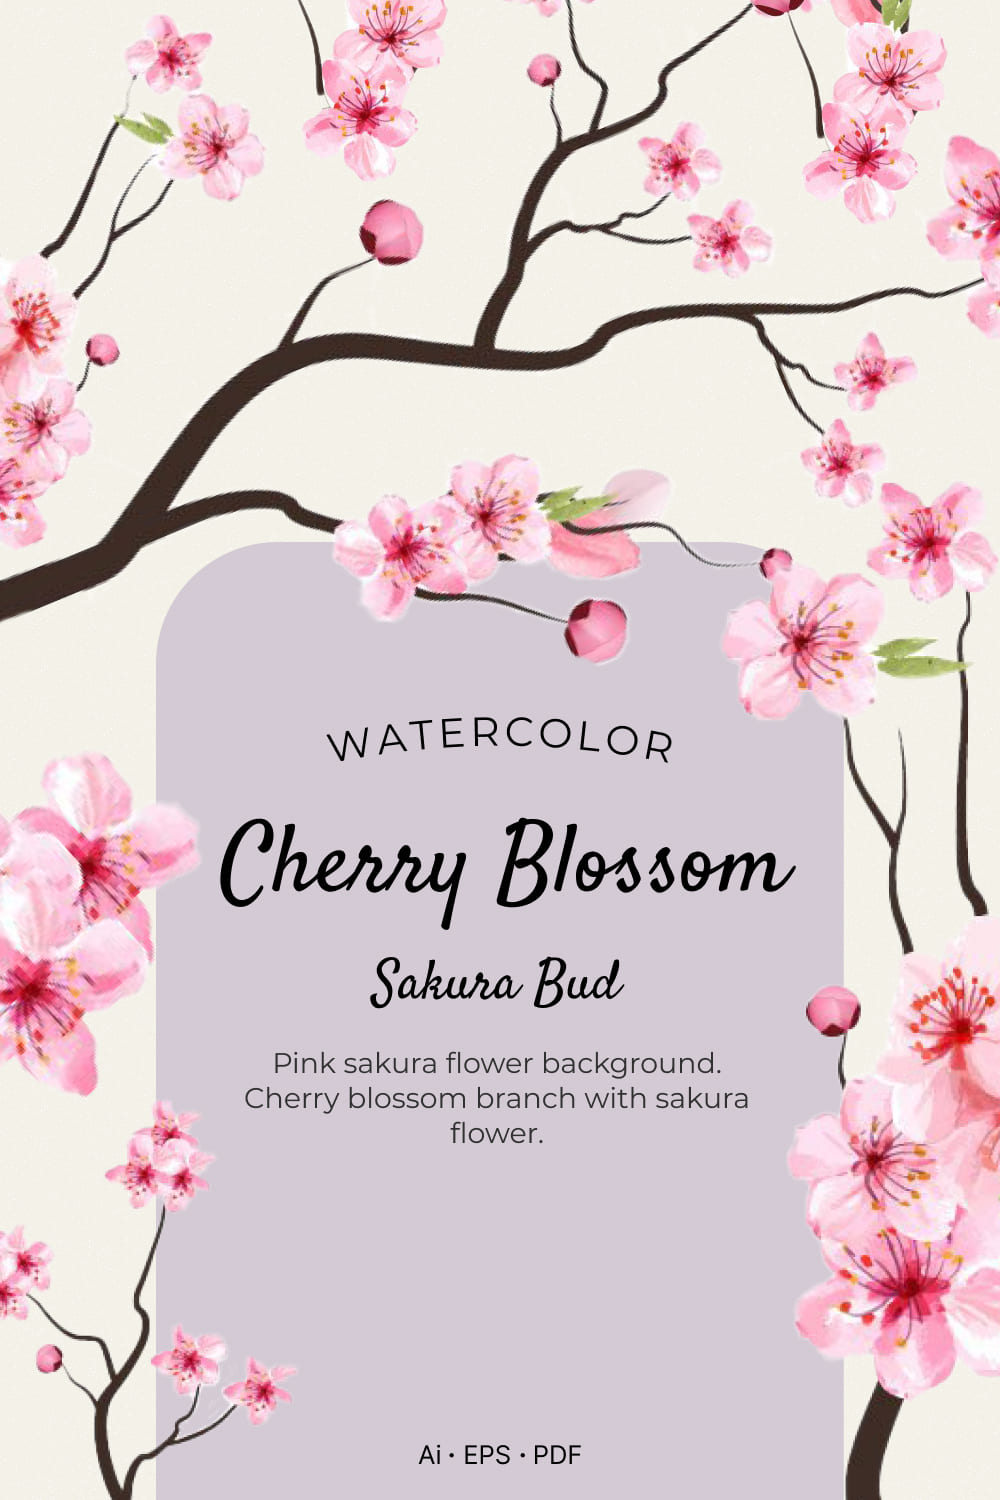 watercolor cherry blossom sakura bud pinterest 773